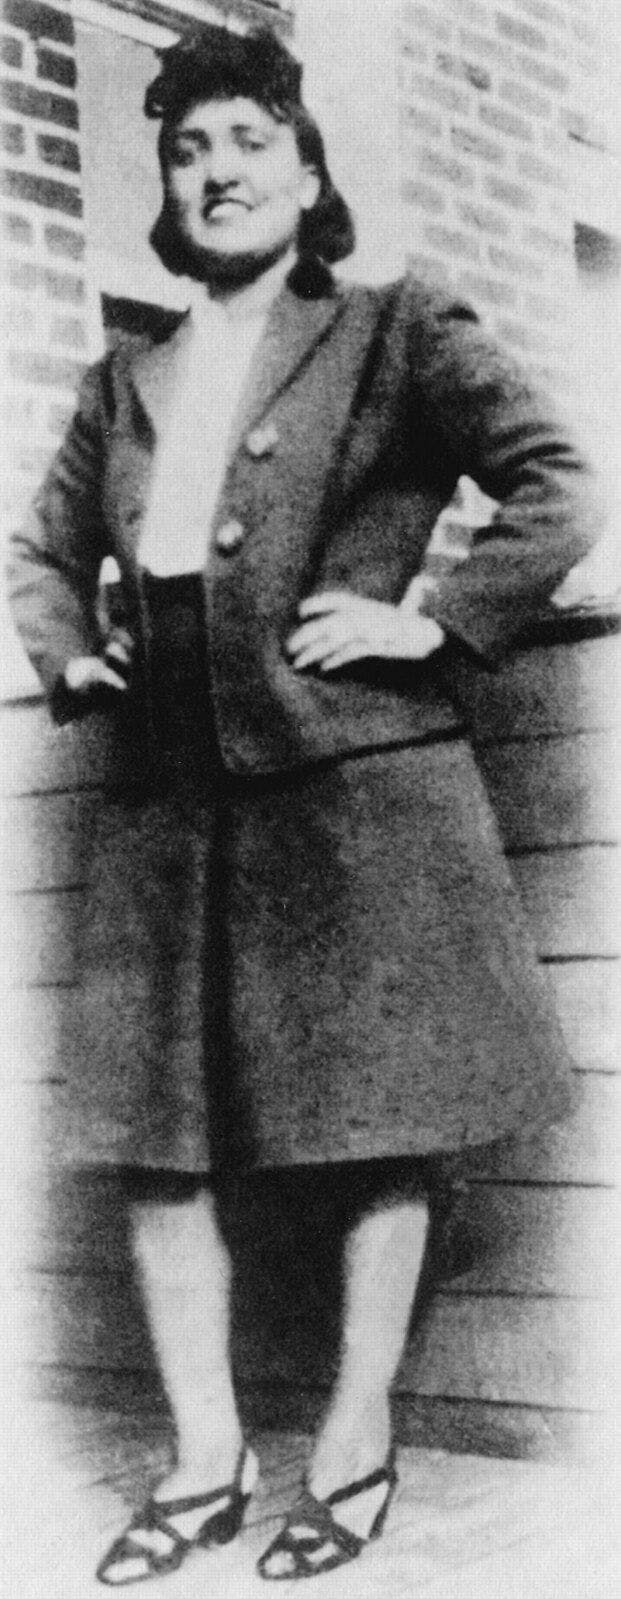 Henrietta Lacks. ("Henrietta Lacks" by Oregon State University is licensed under CC BY-SA 2.0.)